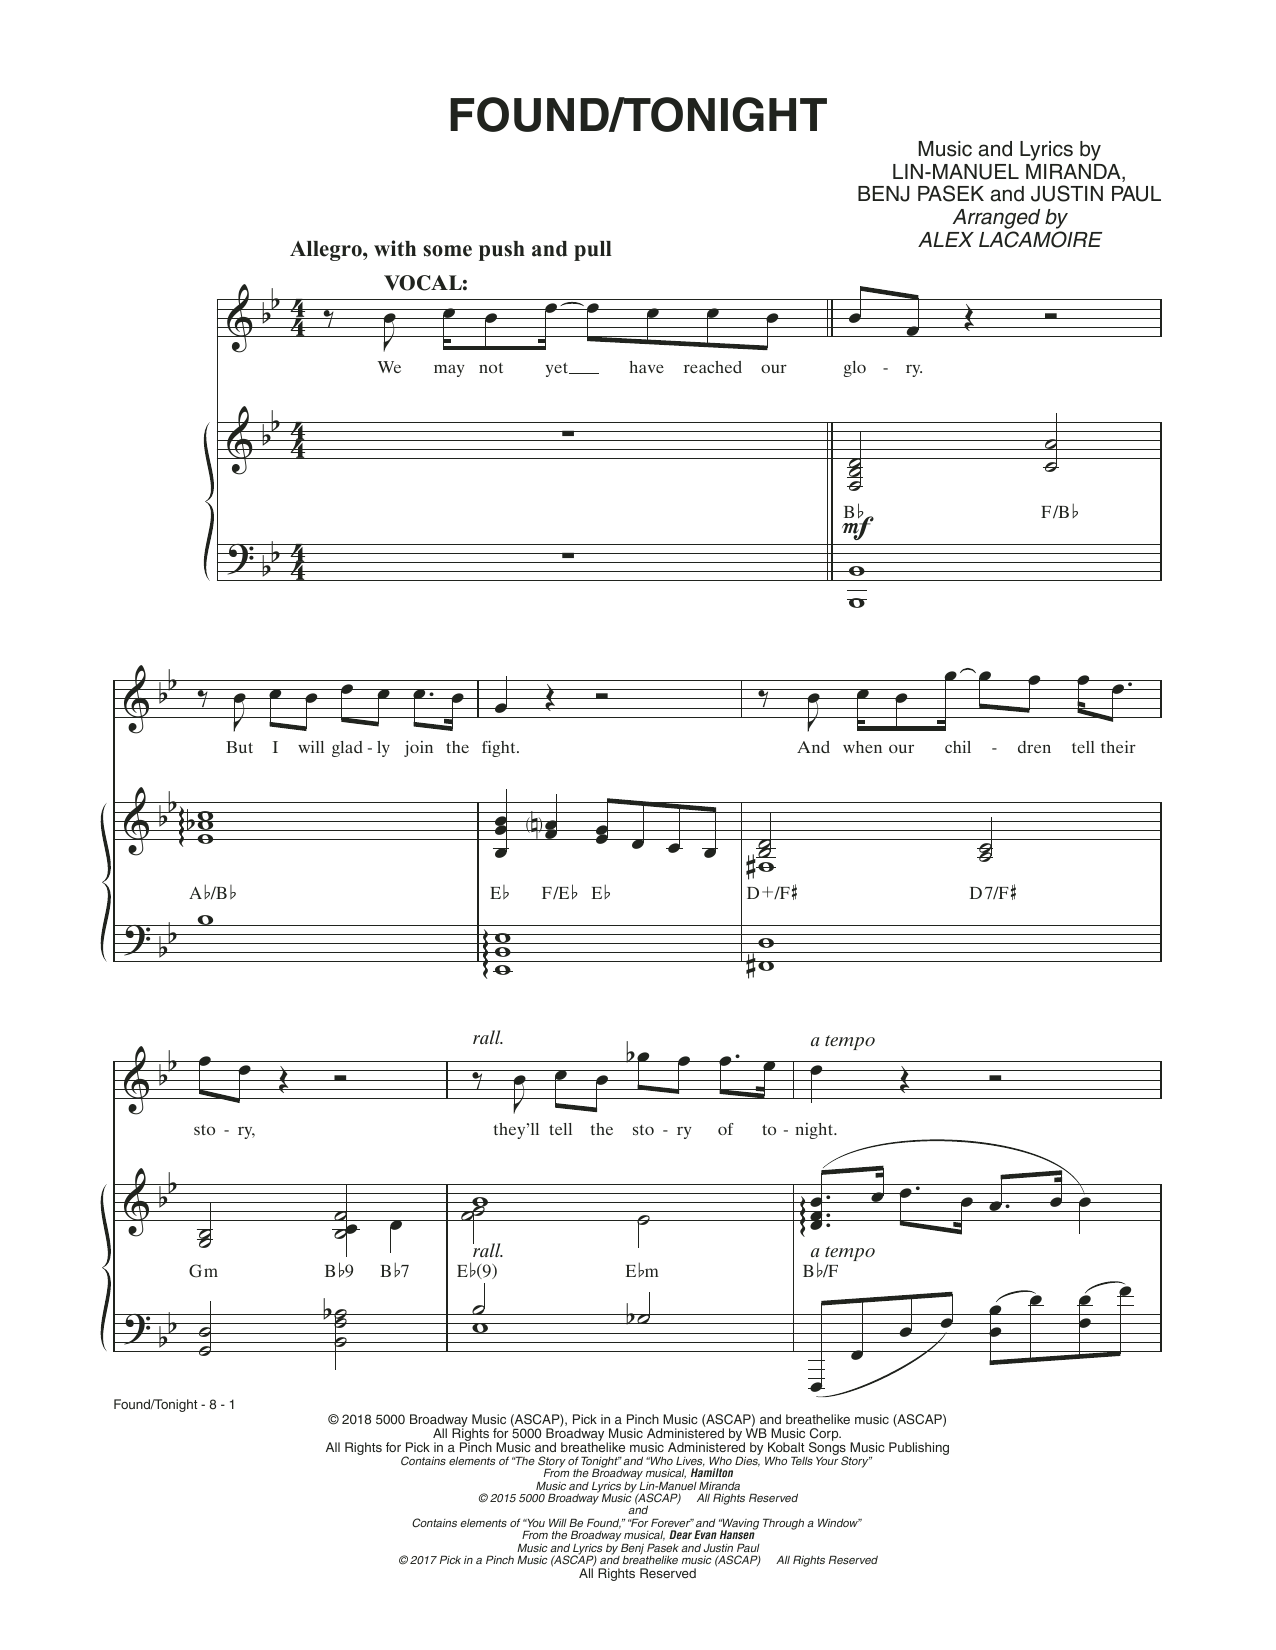 Ben Platt & Lin-Manuel Miranda Found/Tonight Sheet Music Notes & Chords for Piano & Vocal - Download or Print PDF